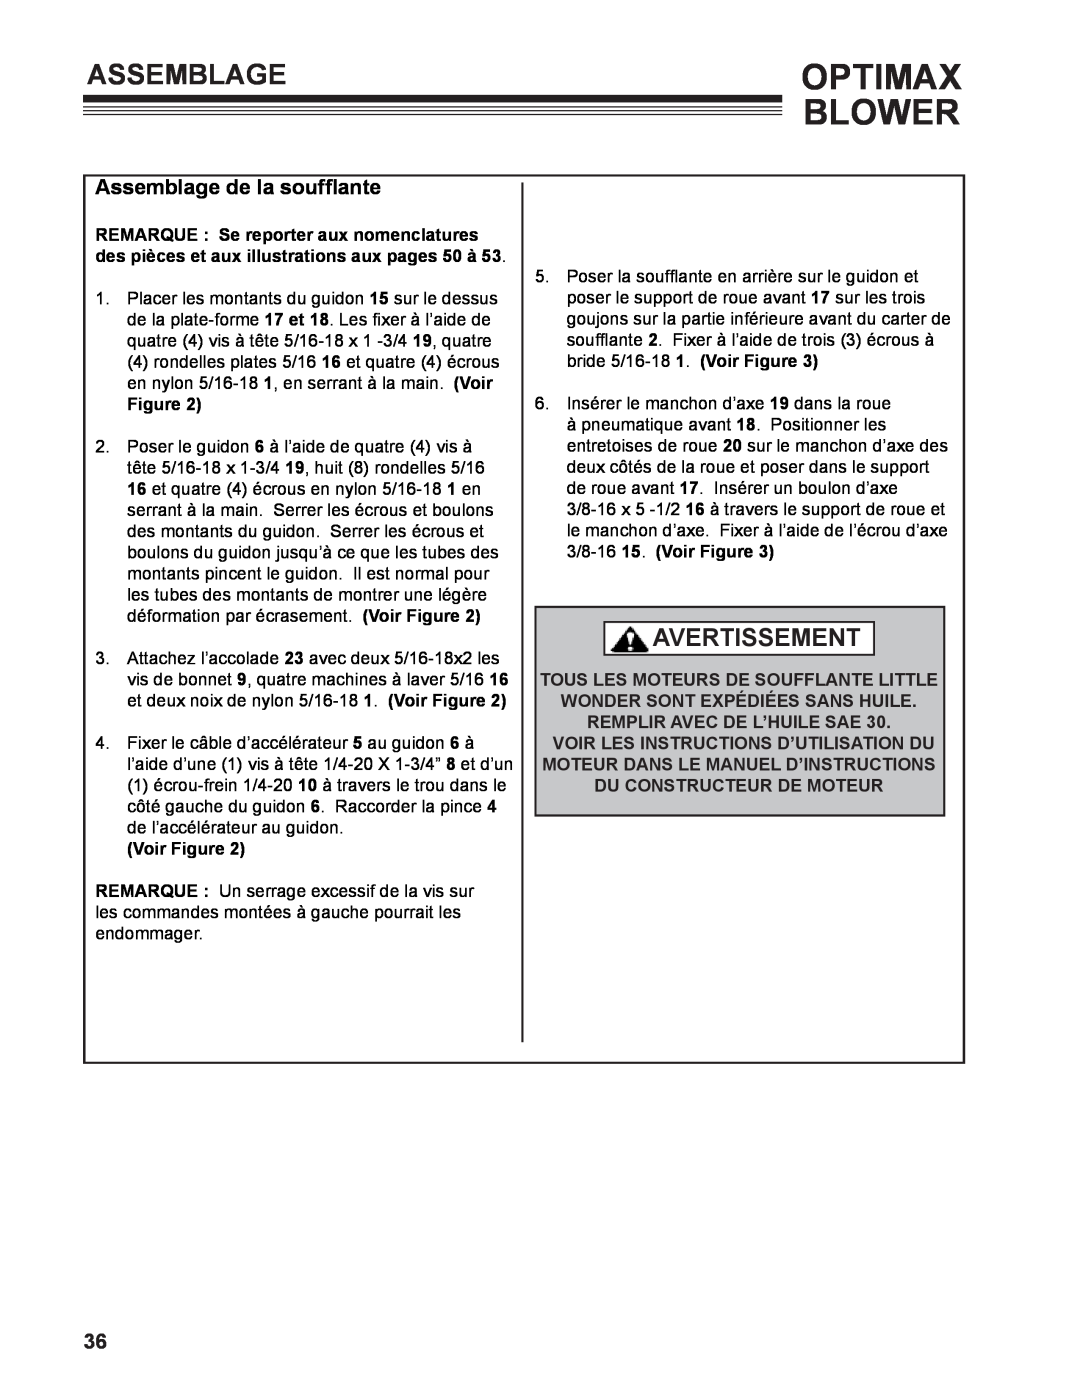 Little Wonder LB901-00-01 technical manual Assemblage de la soufflante, Optimax Blower, Avertissement 